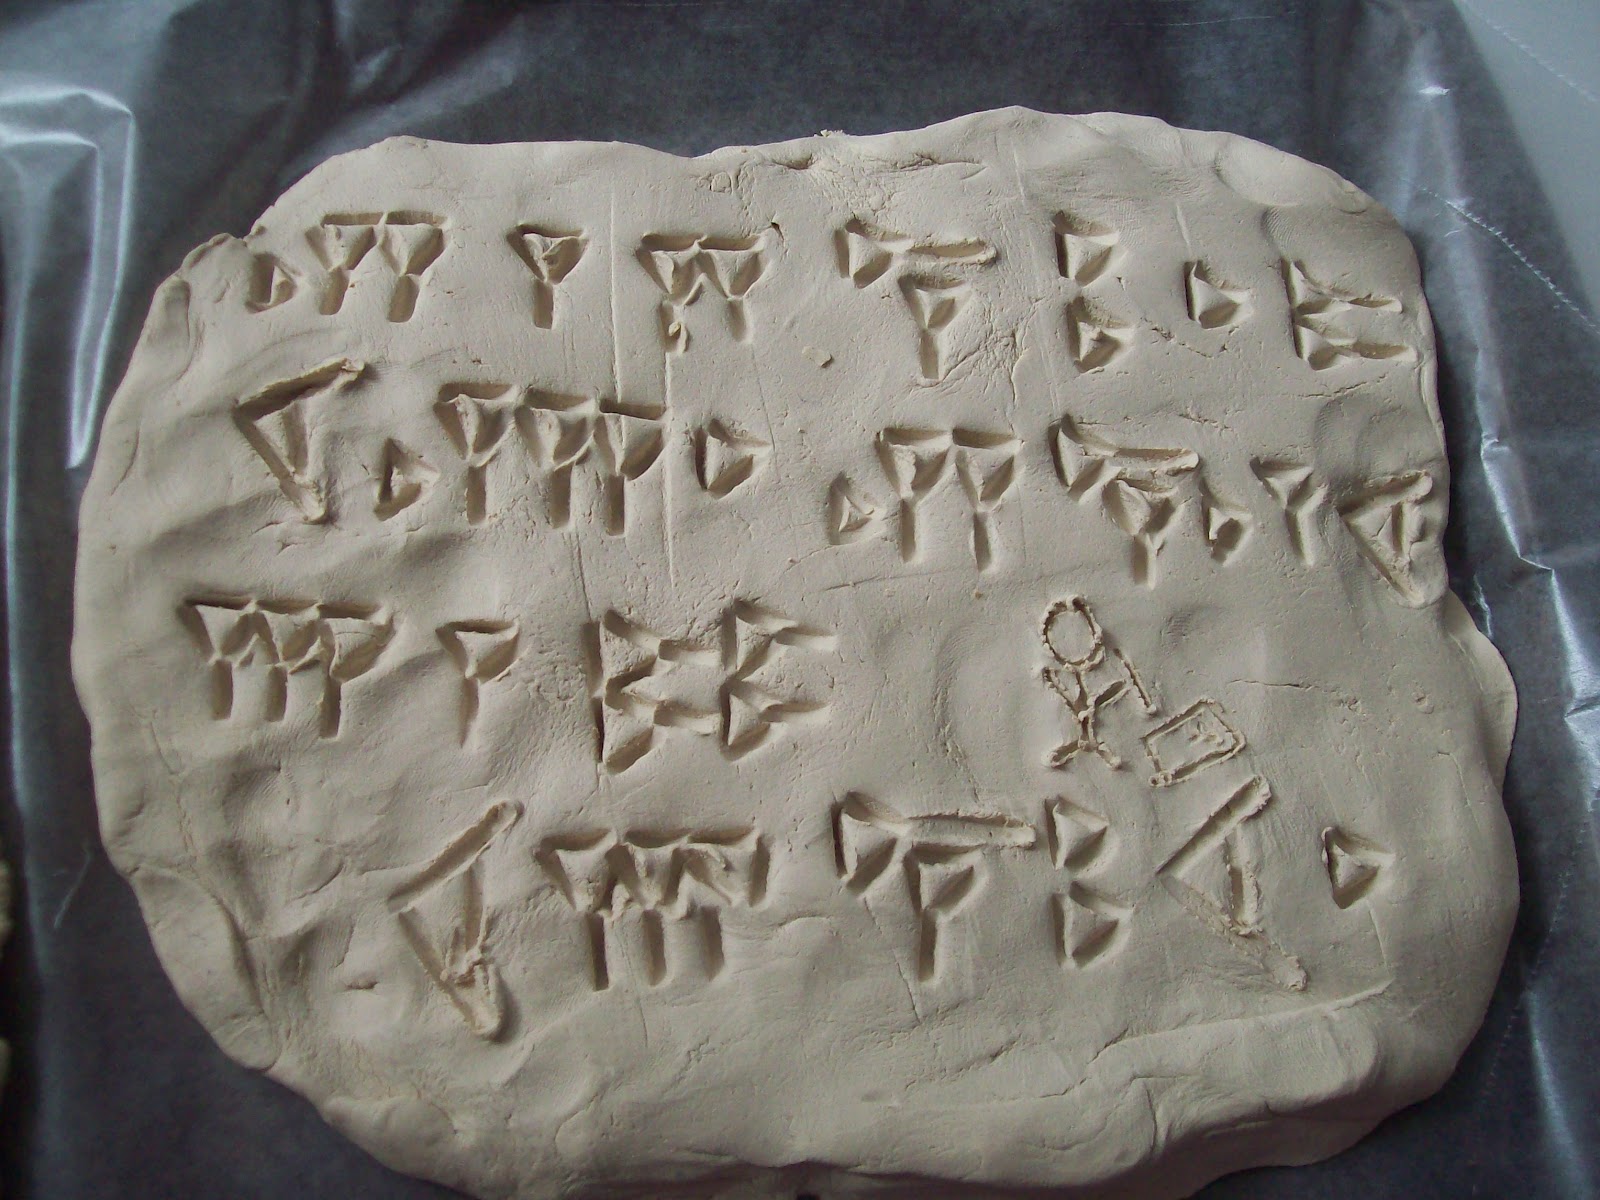 CUNEIFORM: THE WRITING FORM OF MESOPOTAMIA